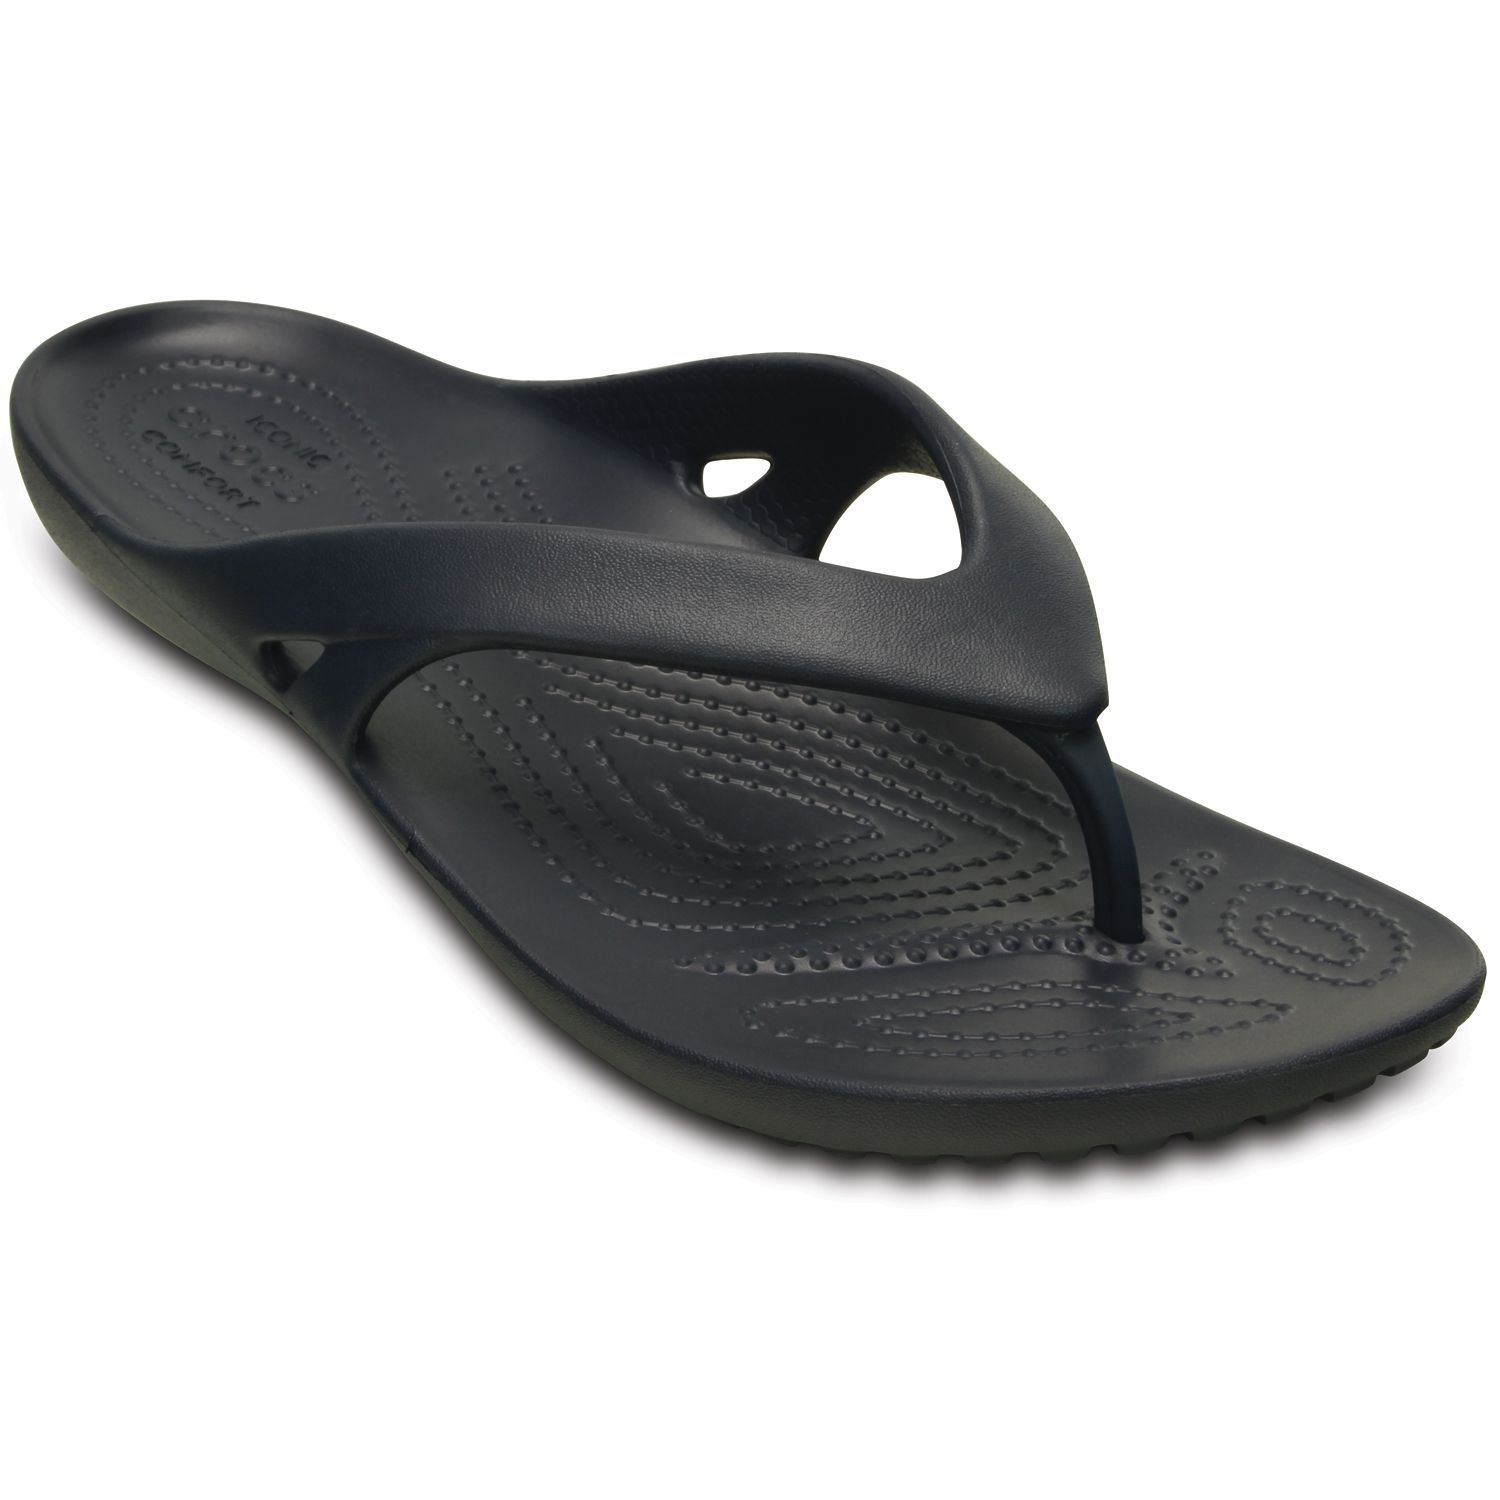 crocs women's rubber sandals